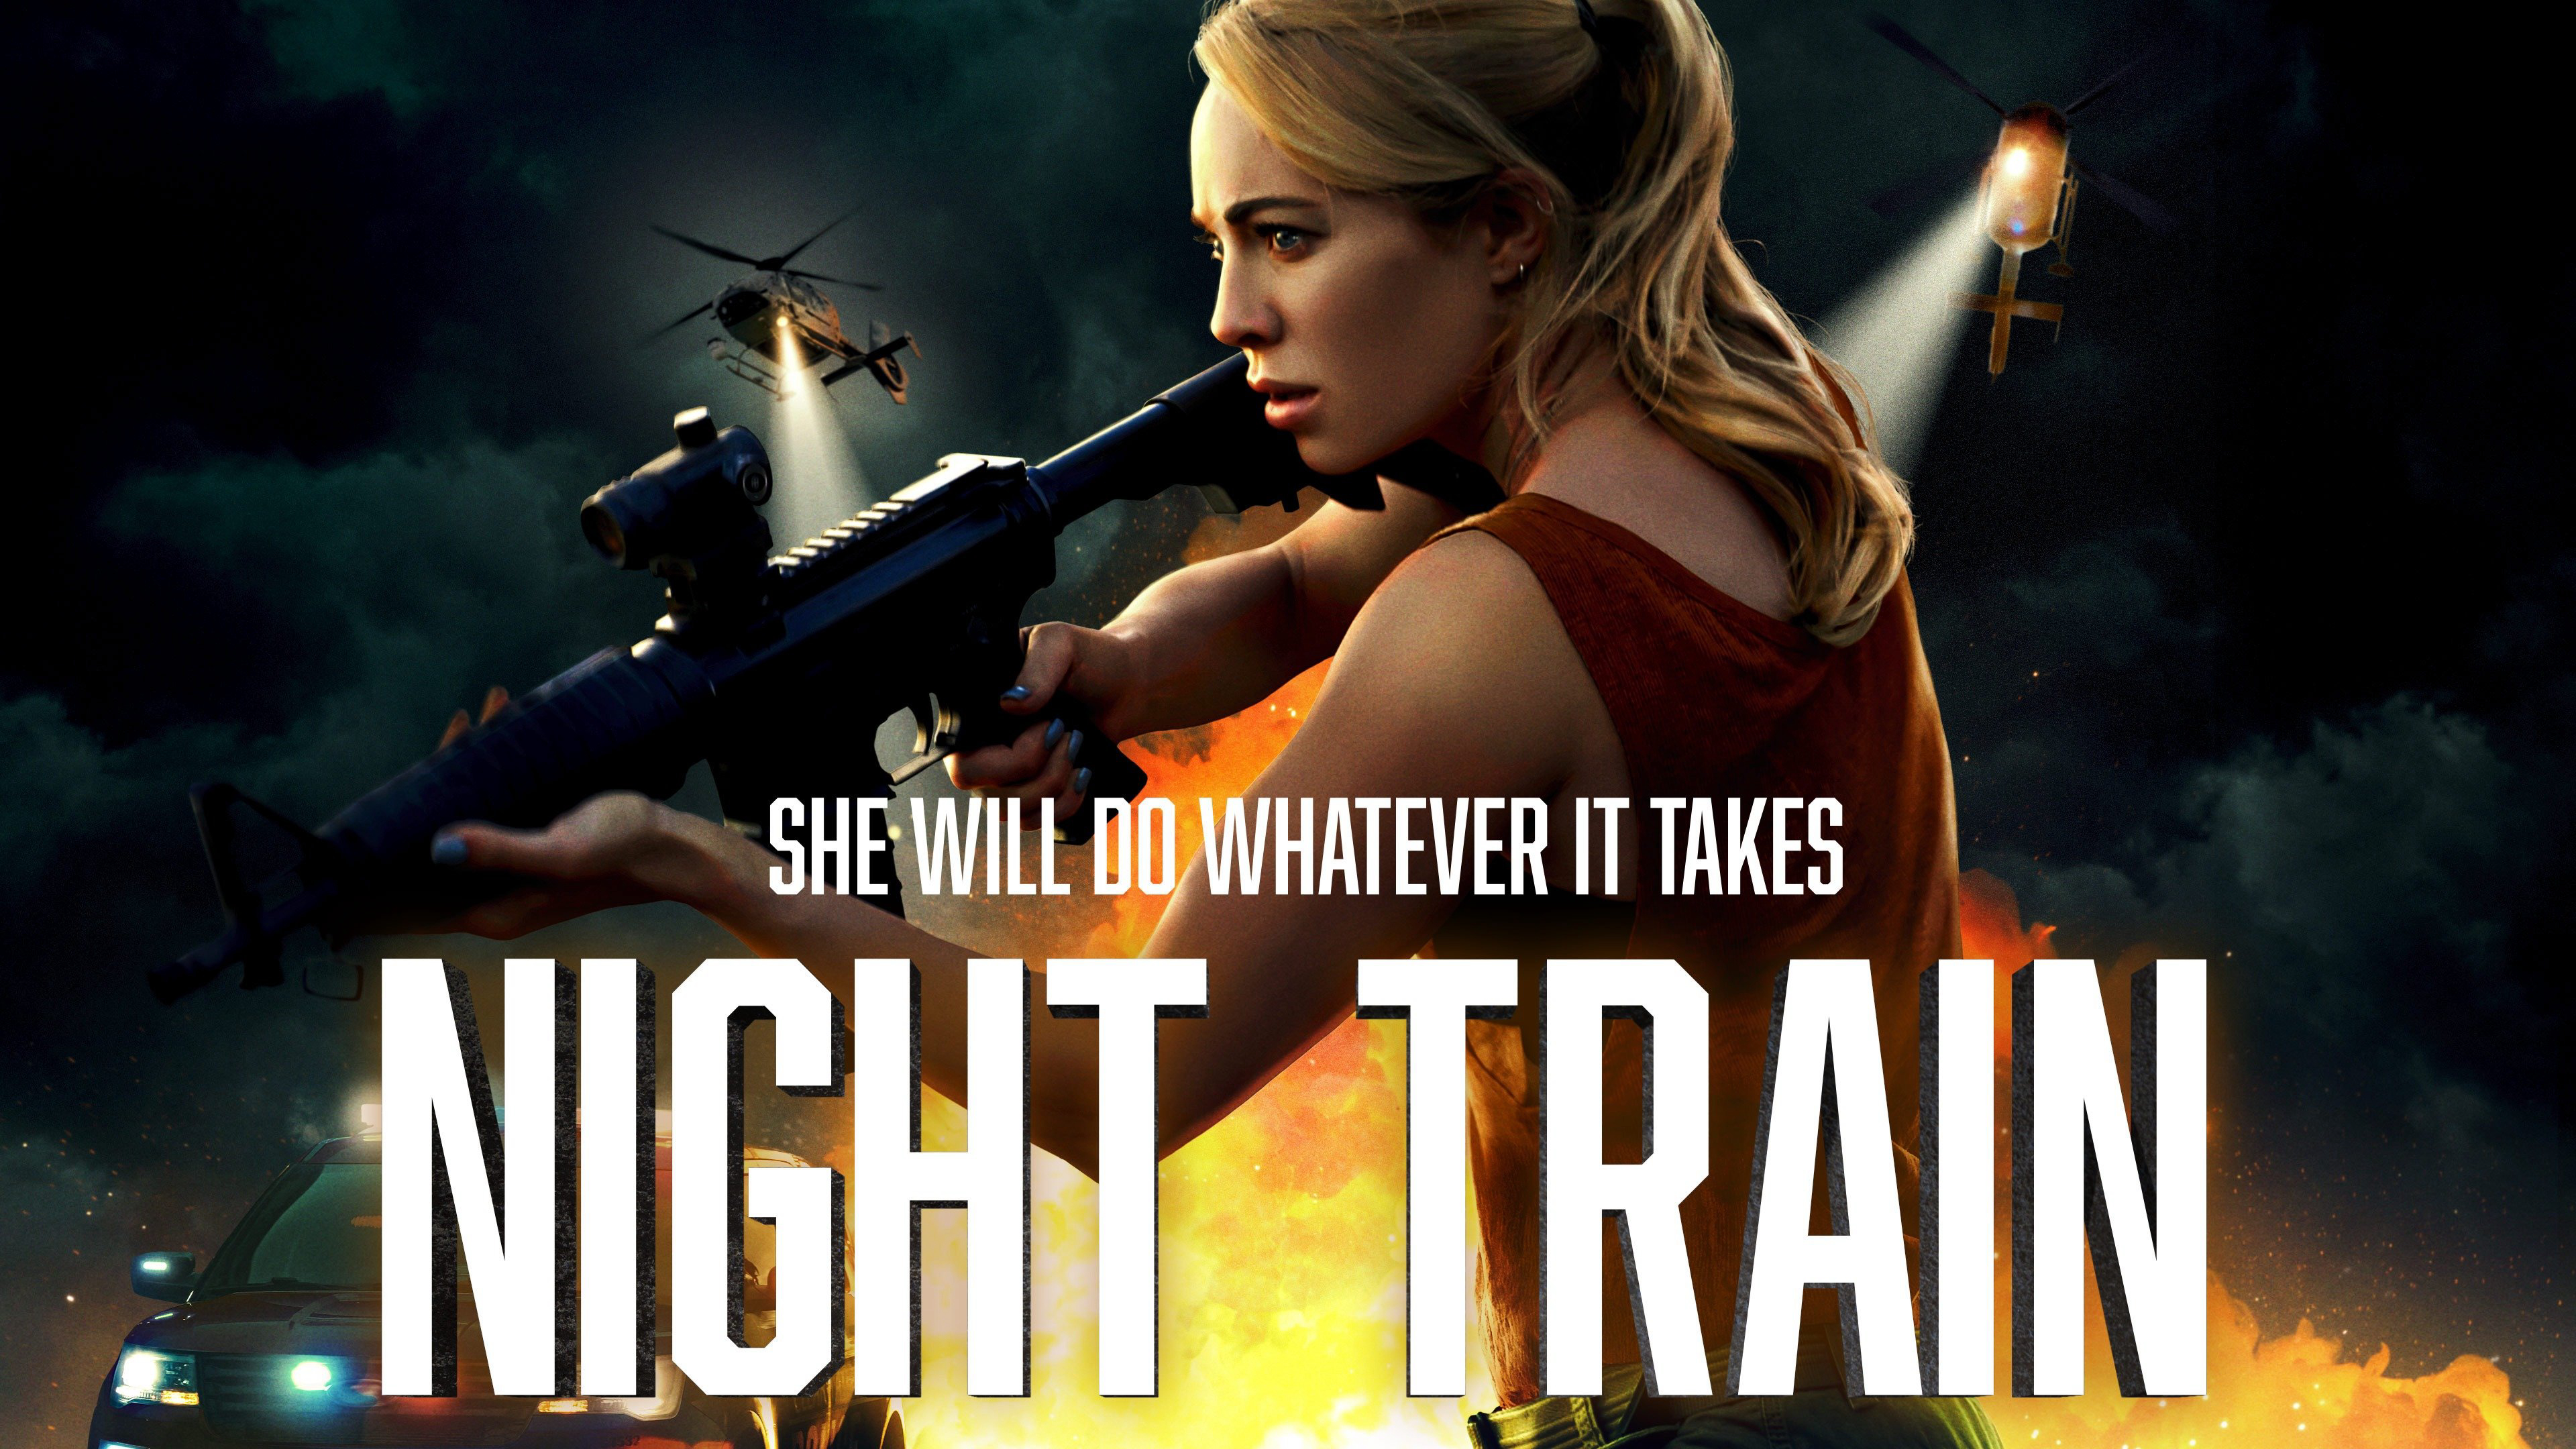 Night Train / Night Train (2009)